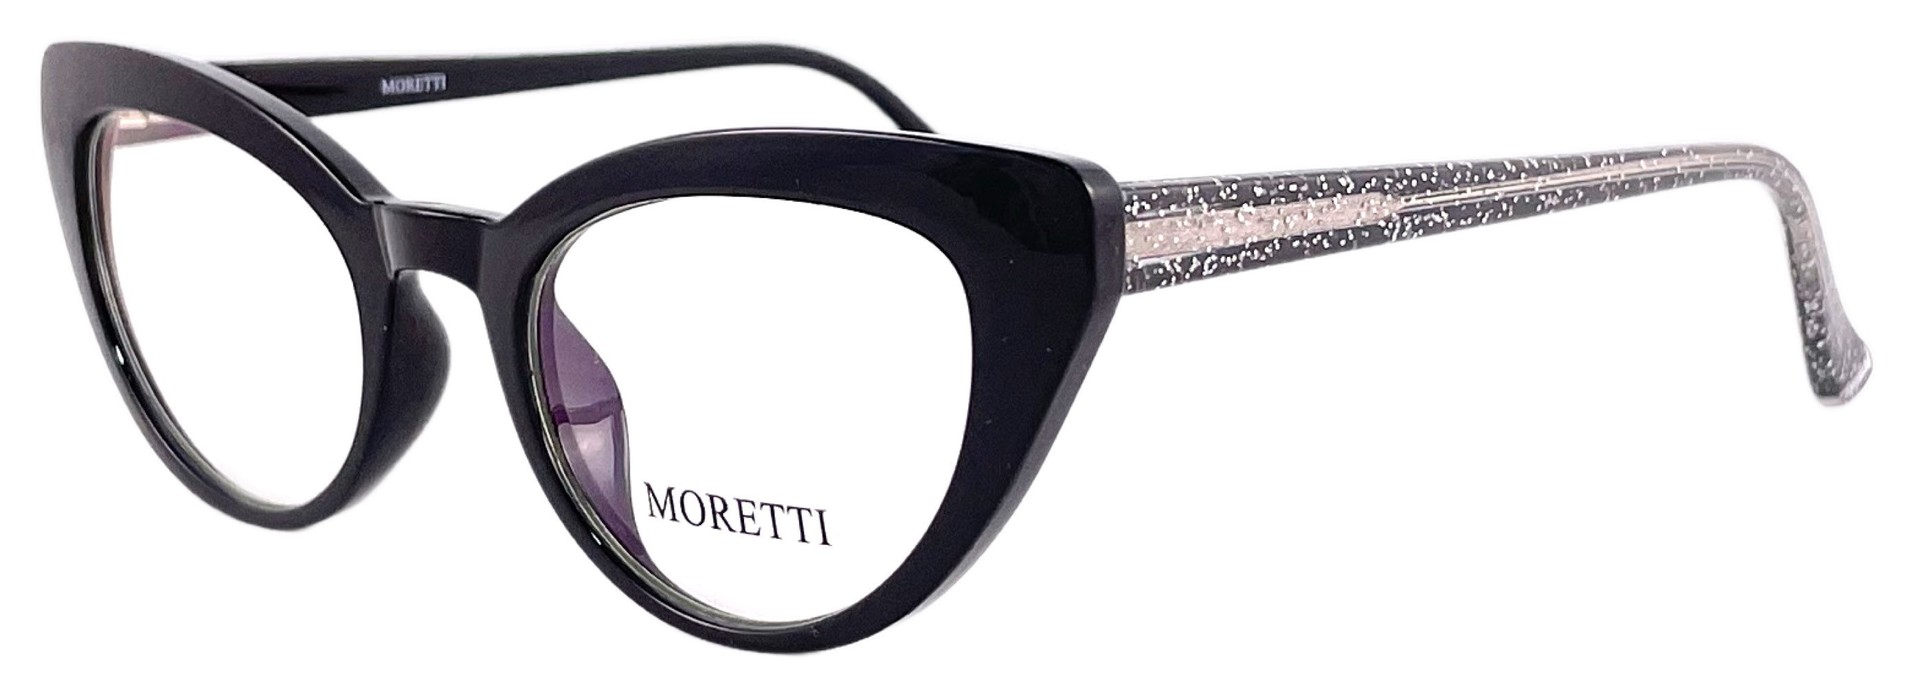 Moretti 2012 C1 2